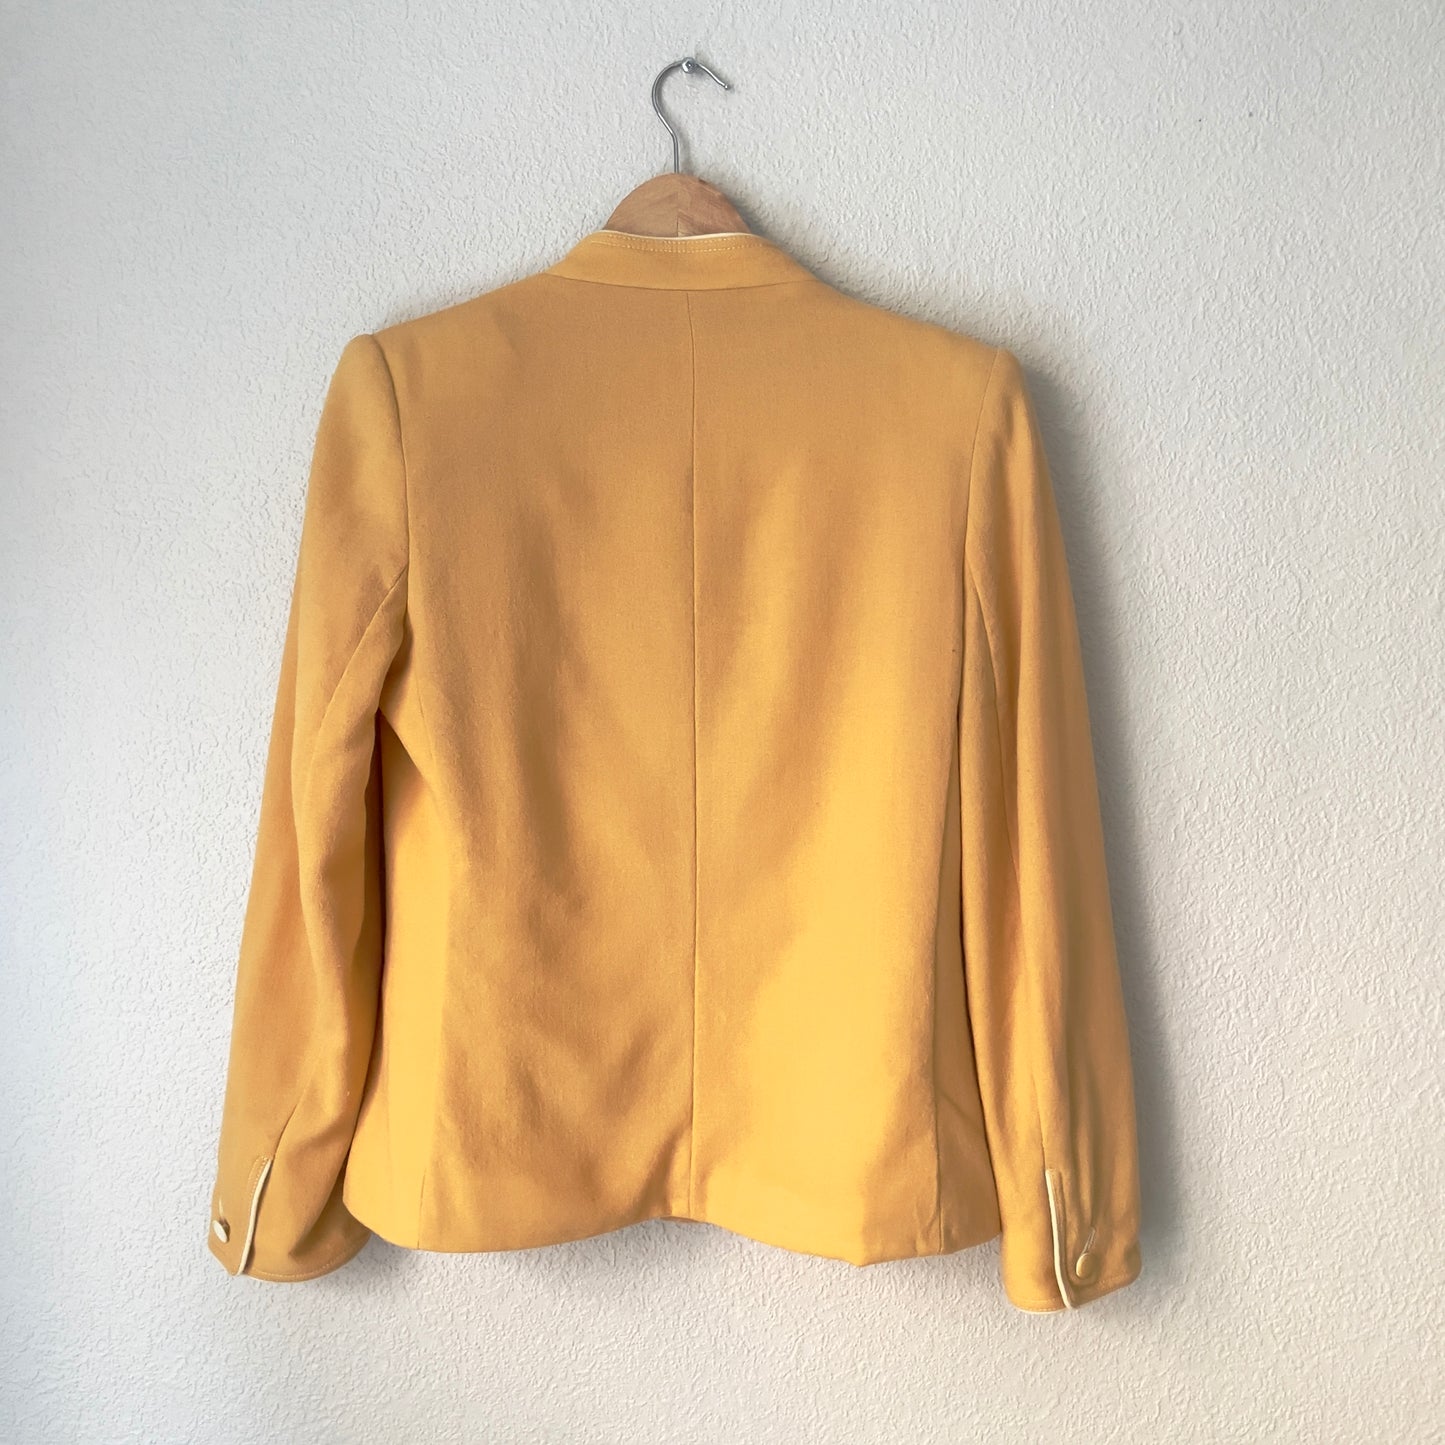 Vintage Yellow Wool Jacket - Mansfield - REPAIRED